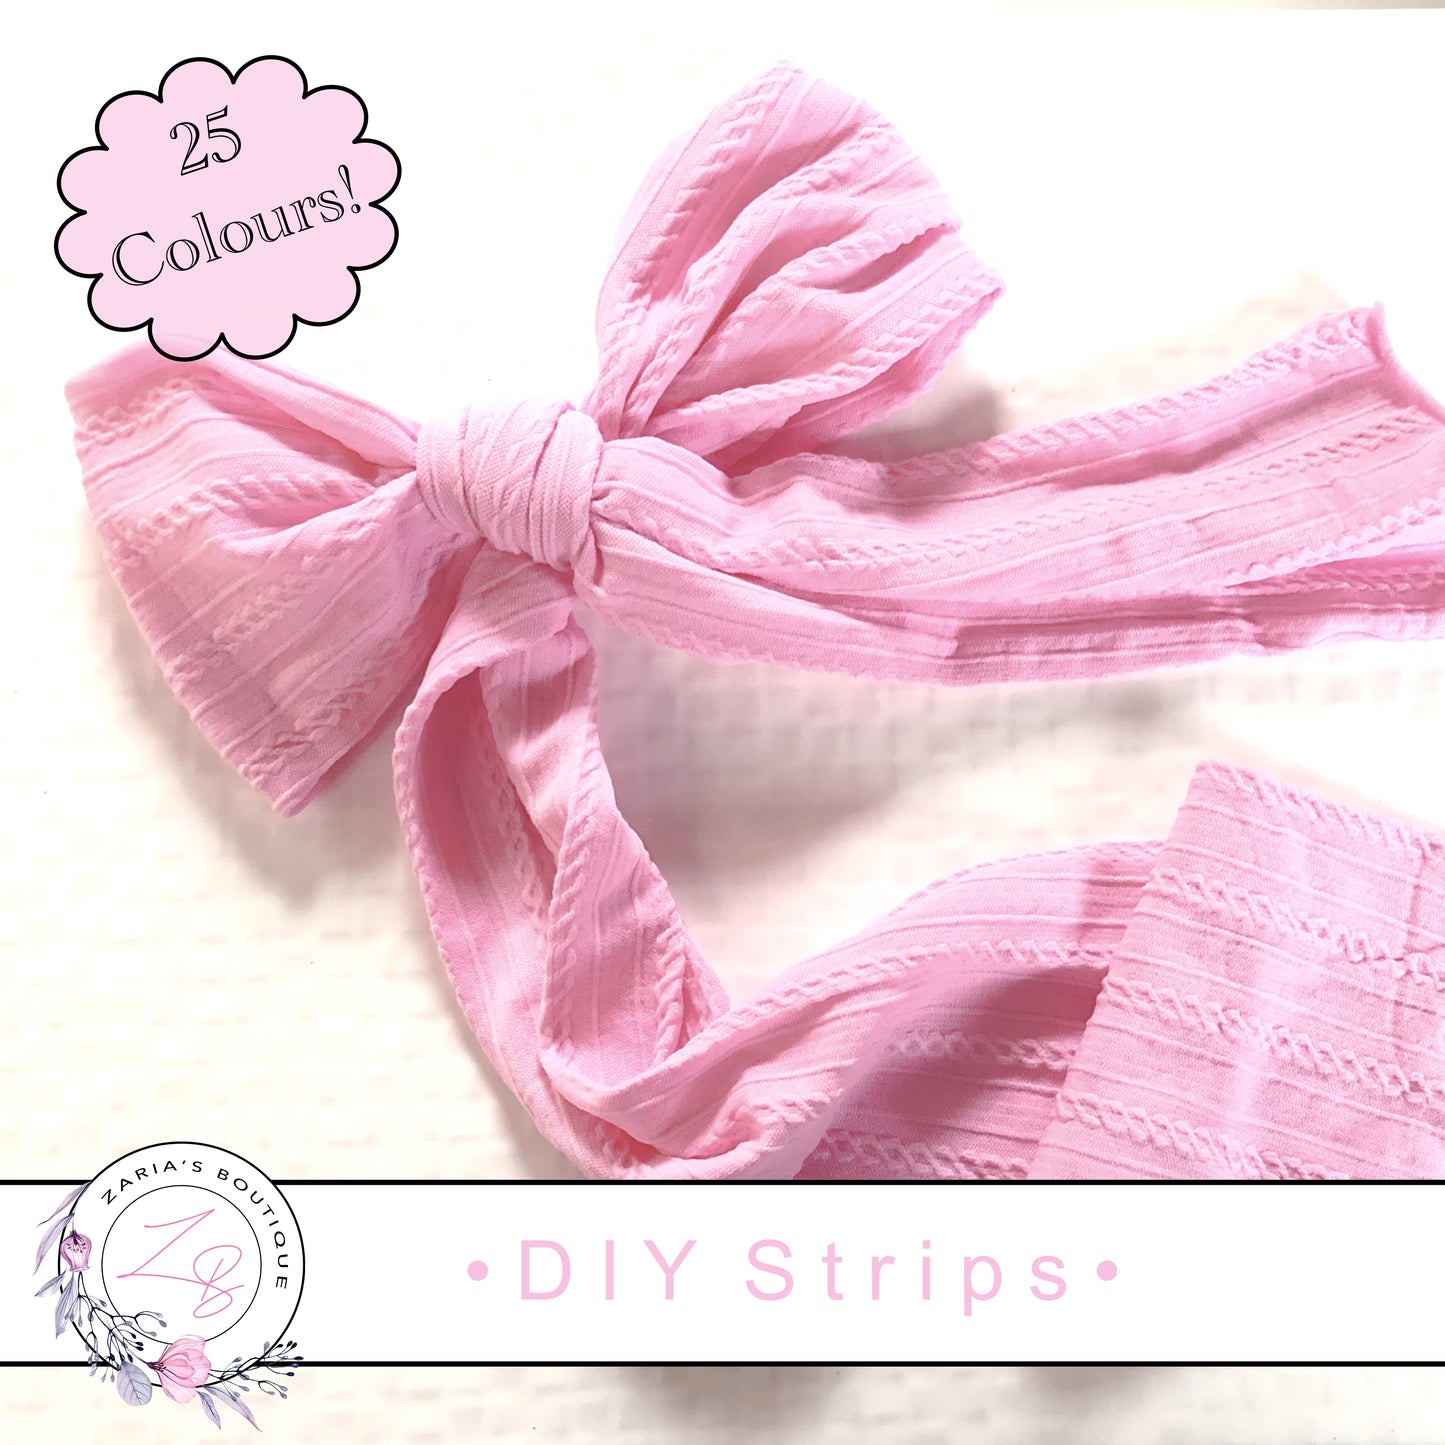 ⋅ DIY Cable Knit Strips ⋅ Autumn Mix